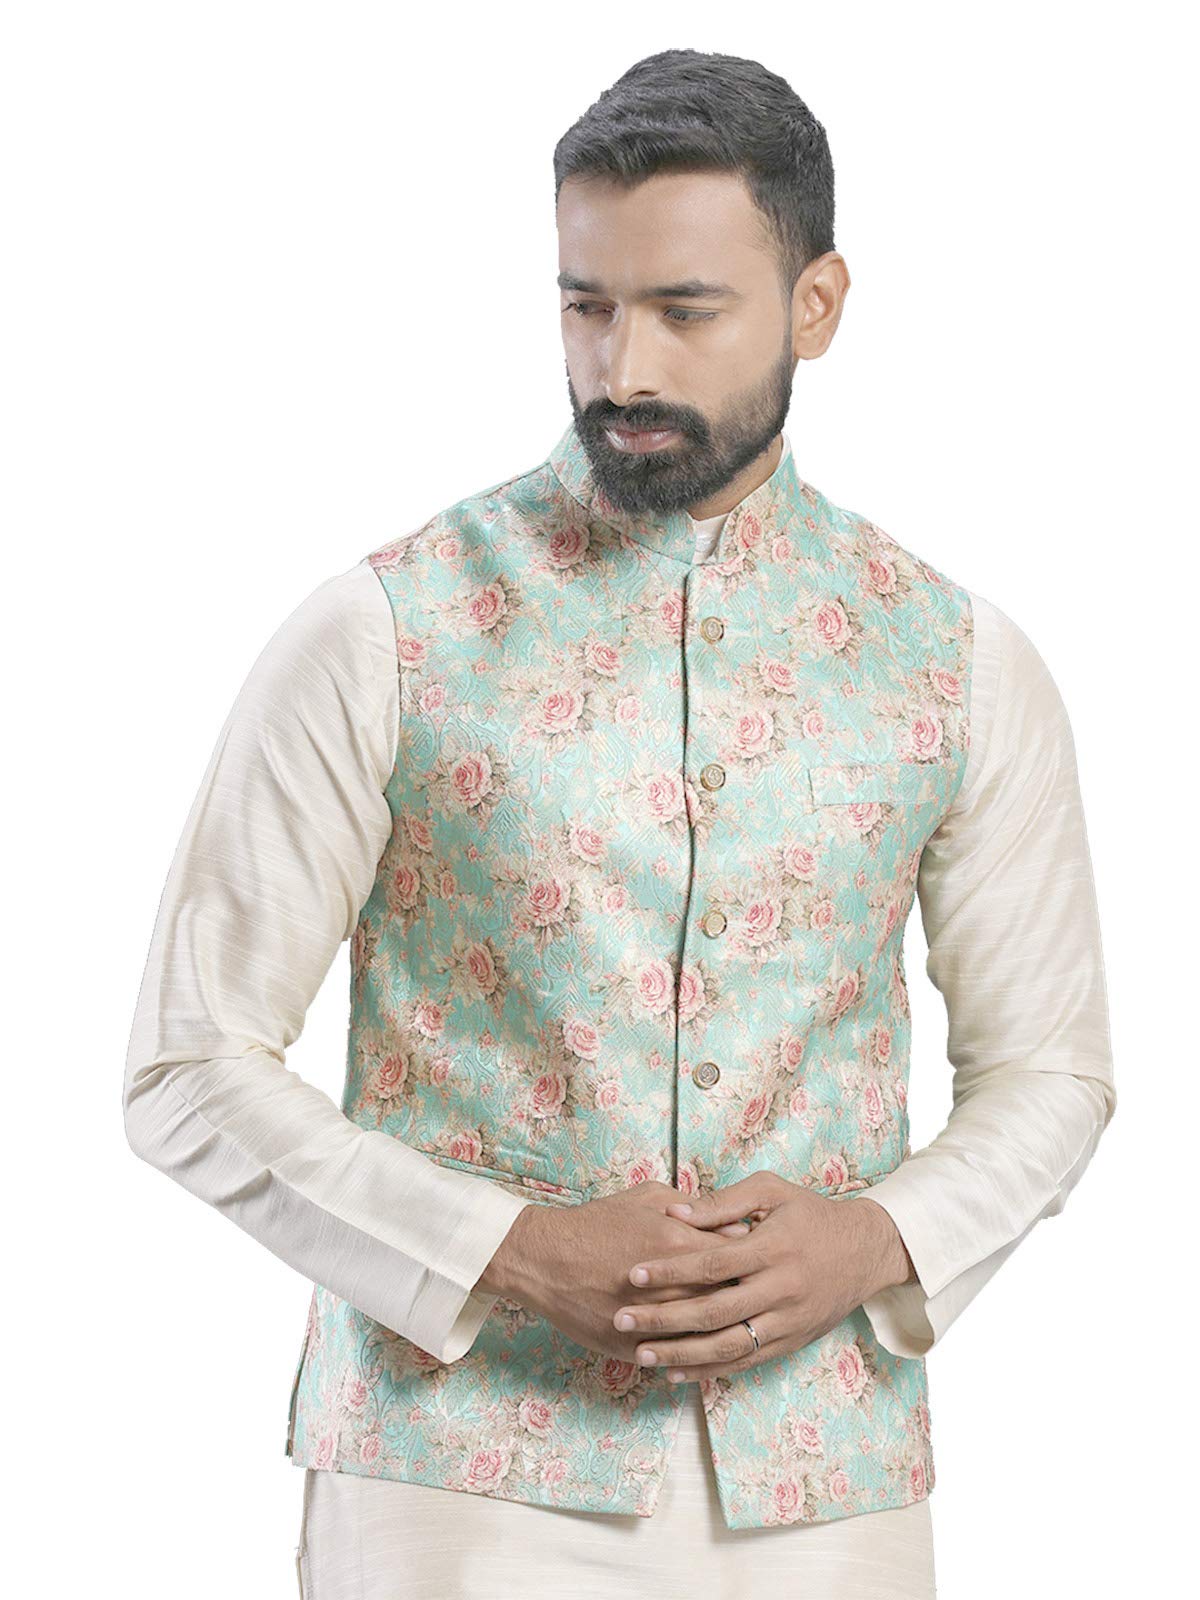 Elina fashion Men's Indian Cotton Kurta Pajama And Printed Nehru Jacket (Waistcoat) Indian Wedding Ethnic Diwali Puja Set